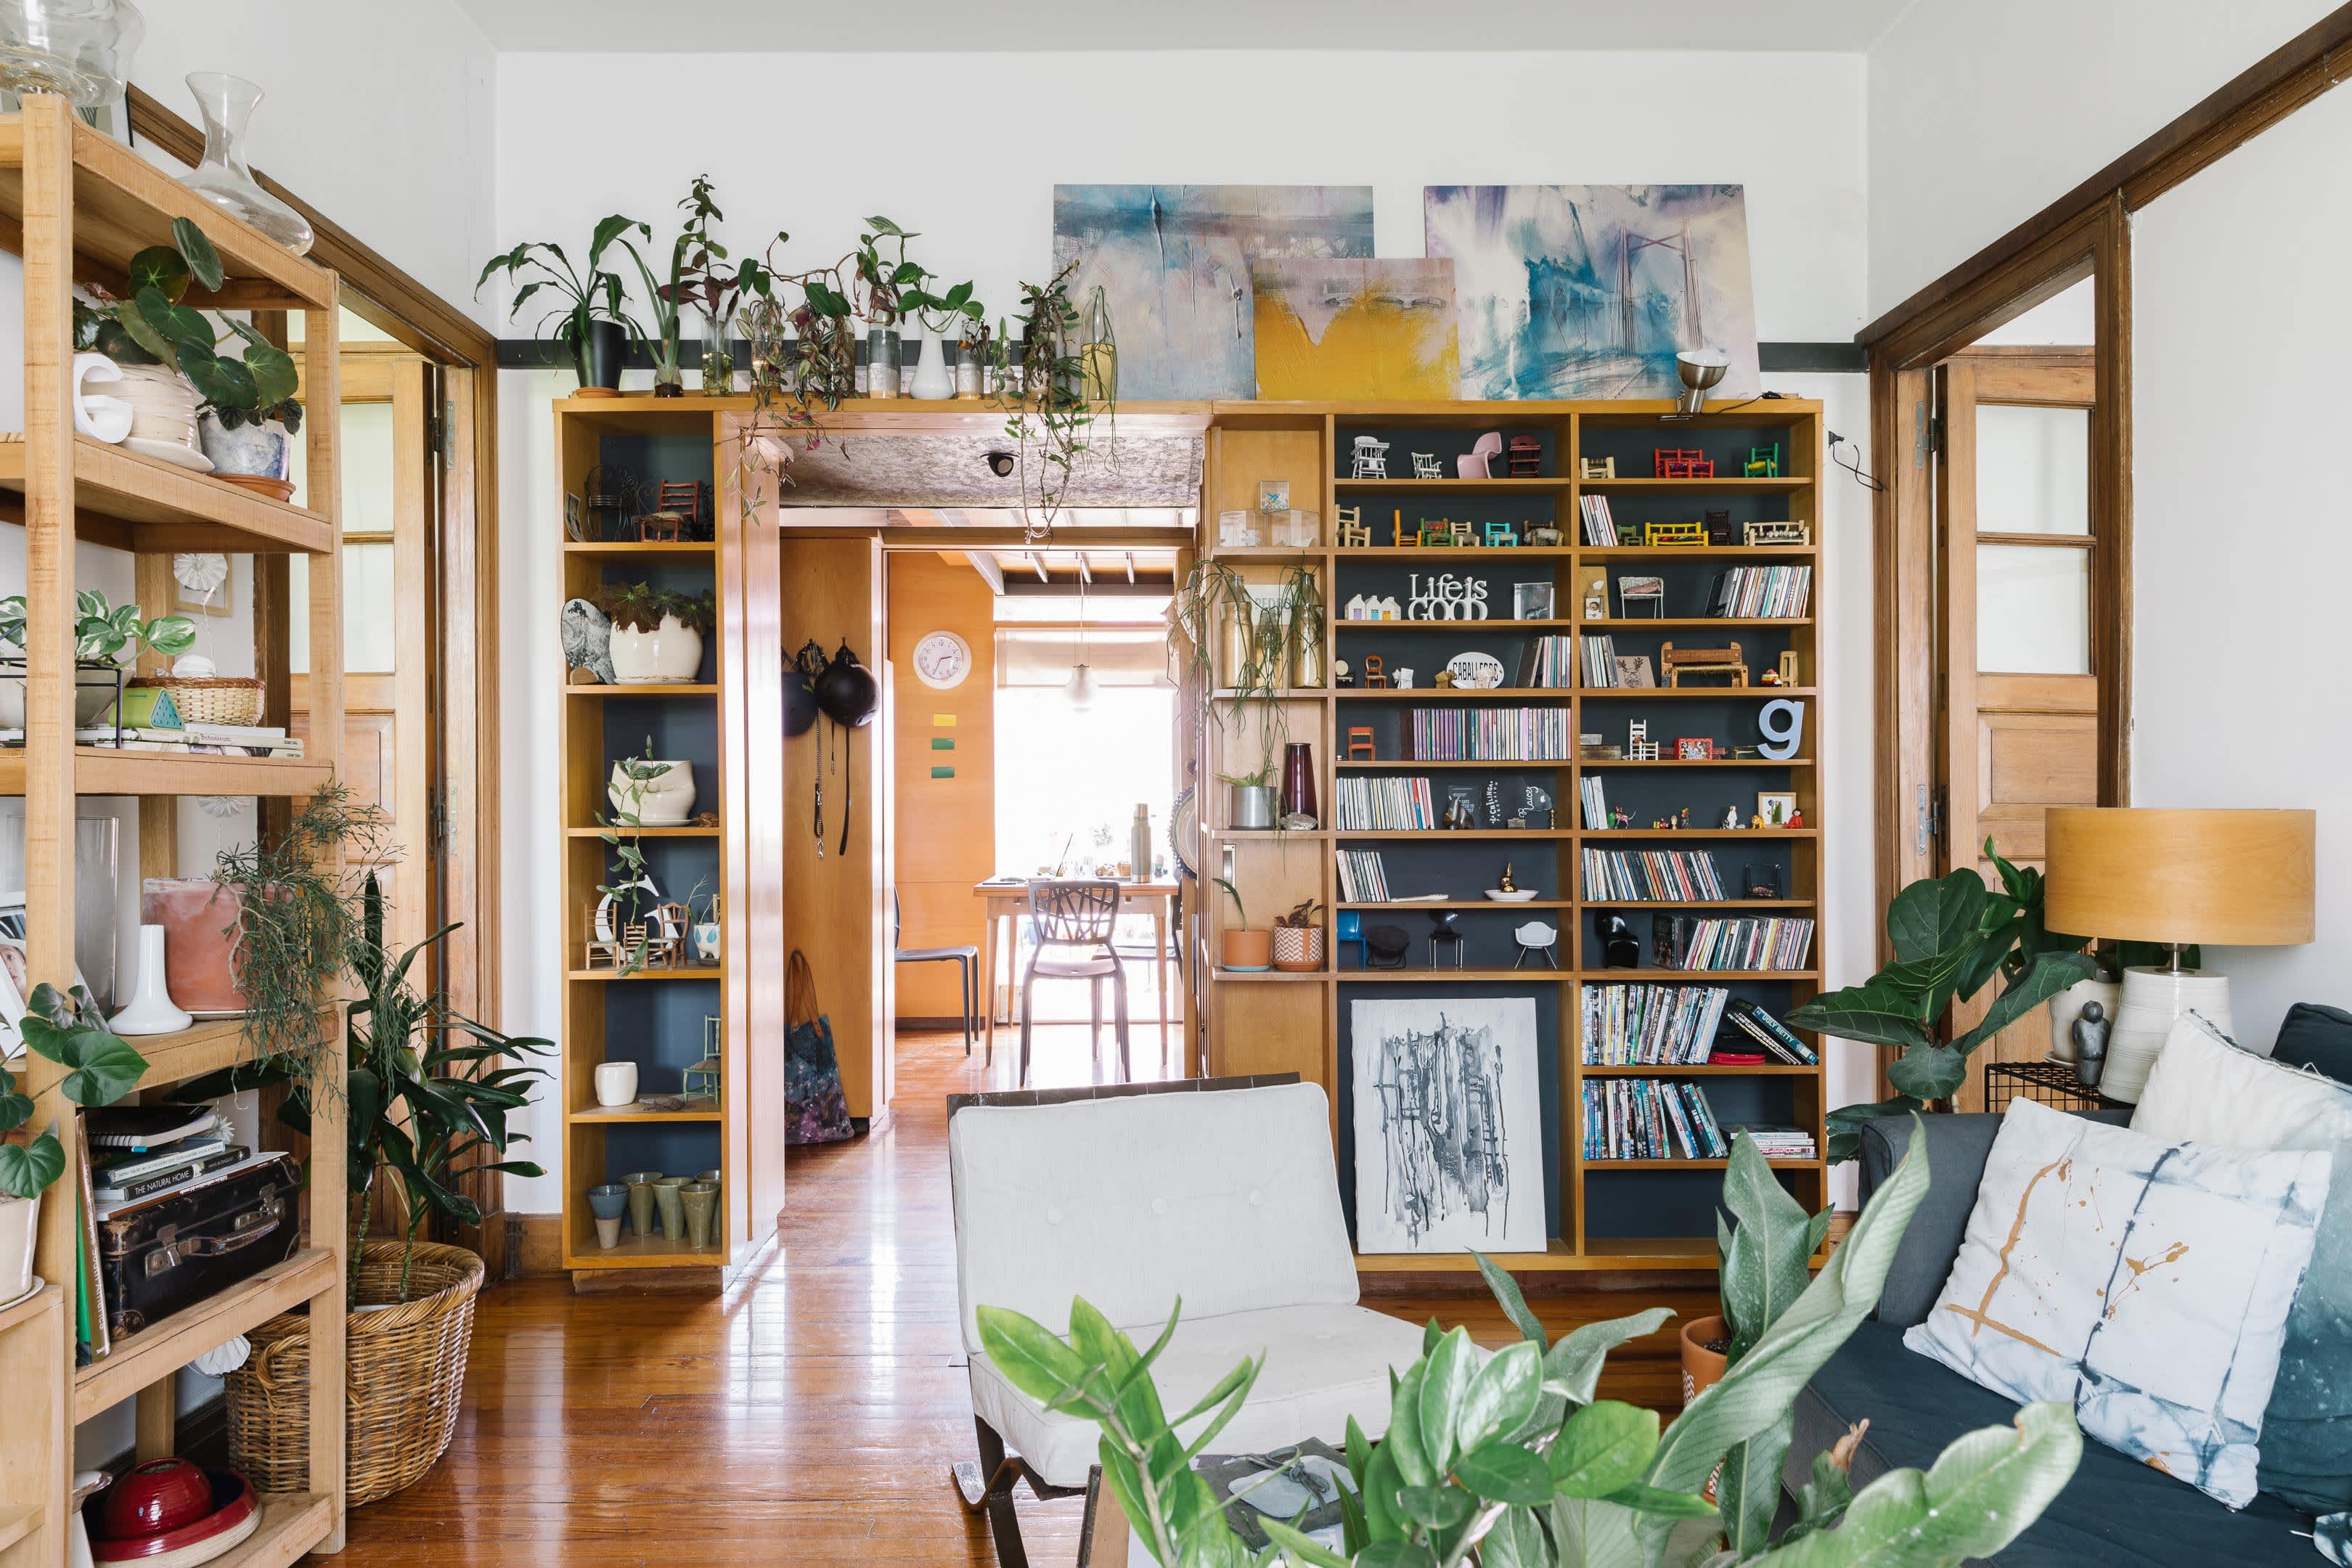 13 Bloxburg hacks ideas  home building design, aesthetic bedroom